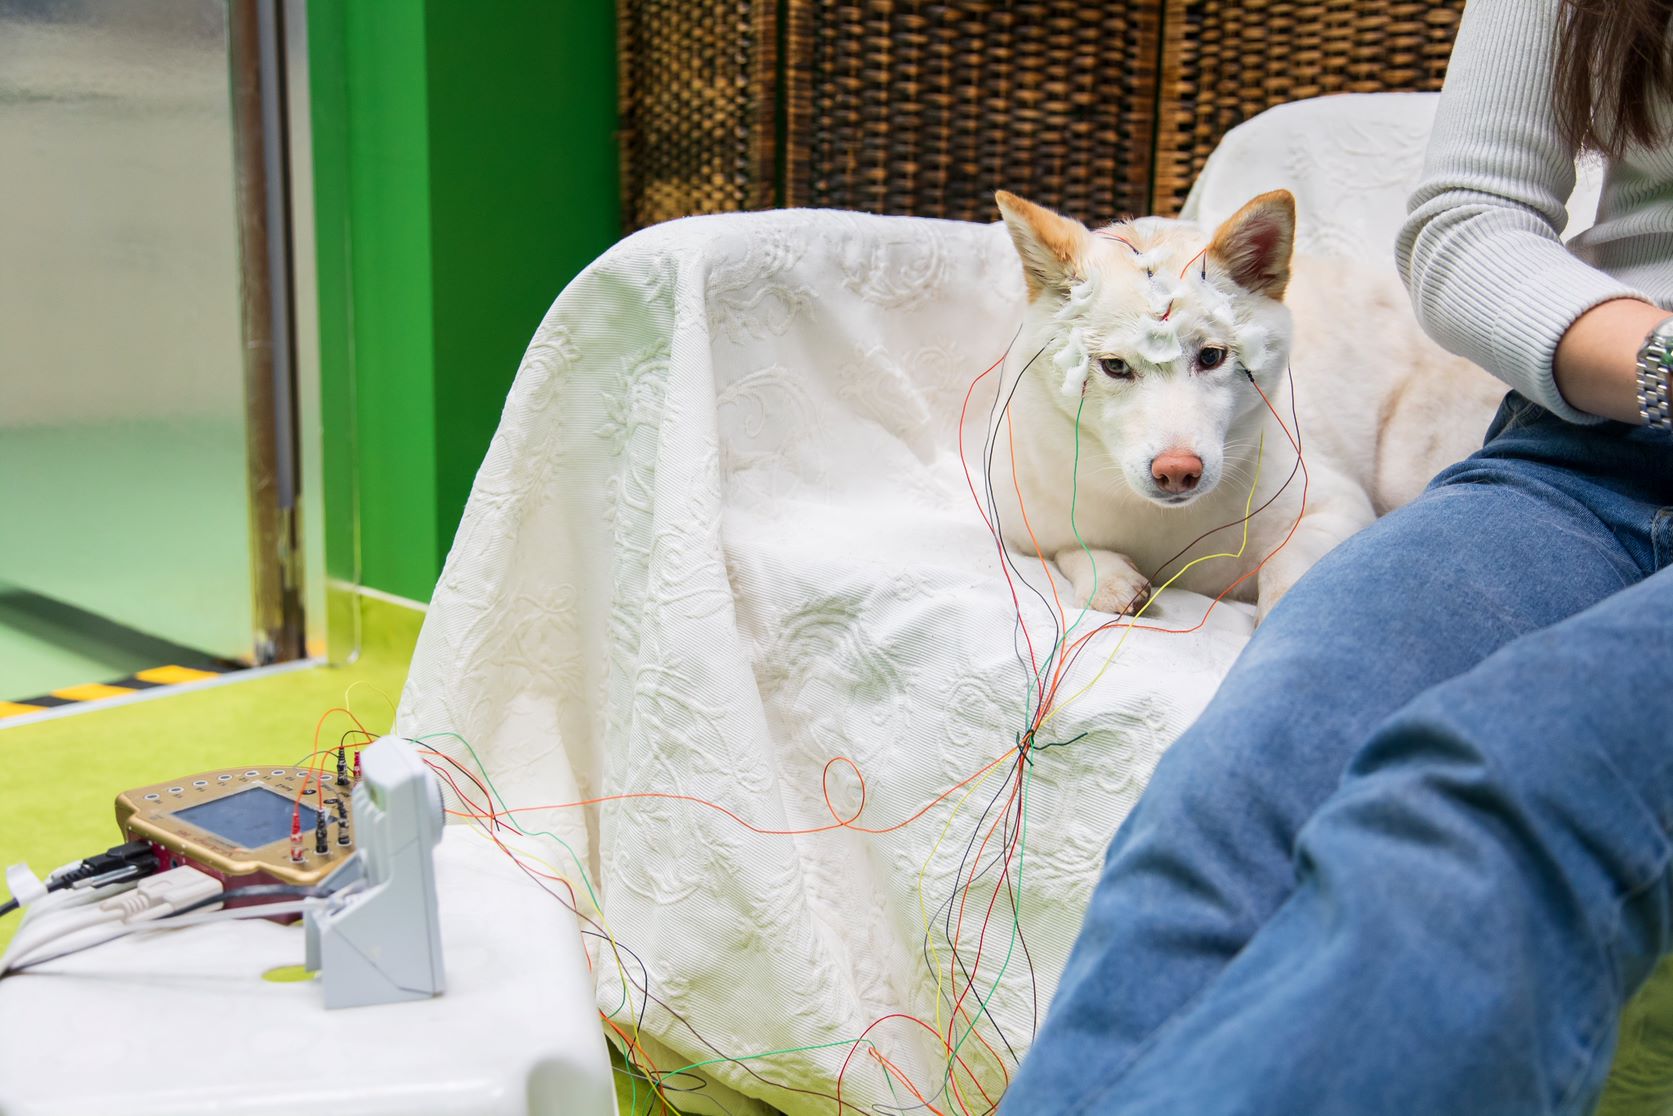 a photograph of a dog EEG experimental setup